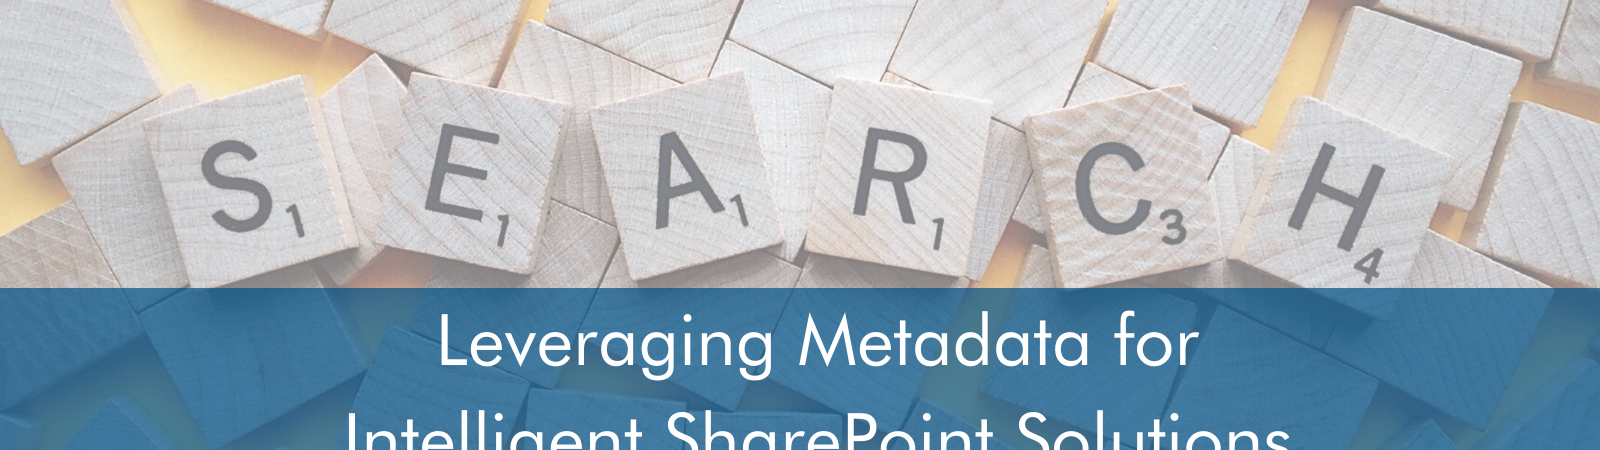 Leveraging metadata for intelligent SharePoint Solutions